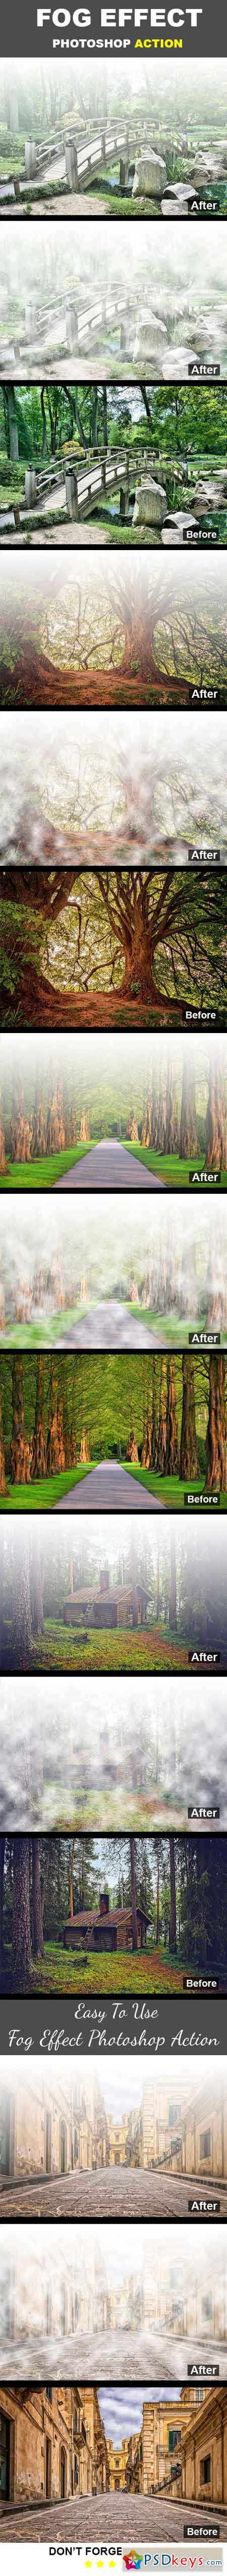 Fog Effect Photoshop Action 22753613